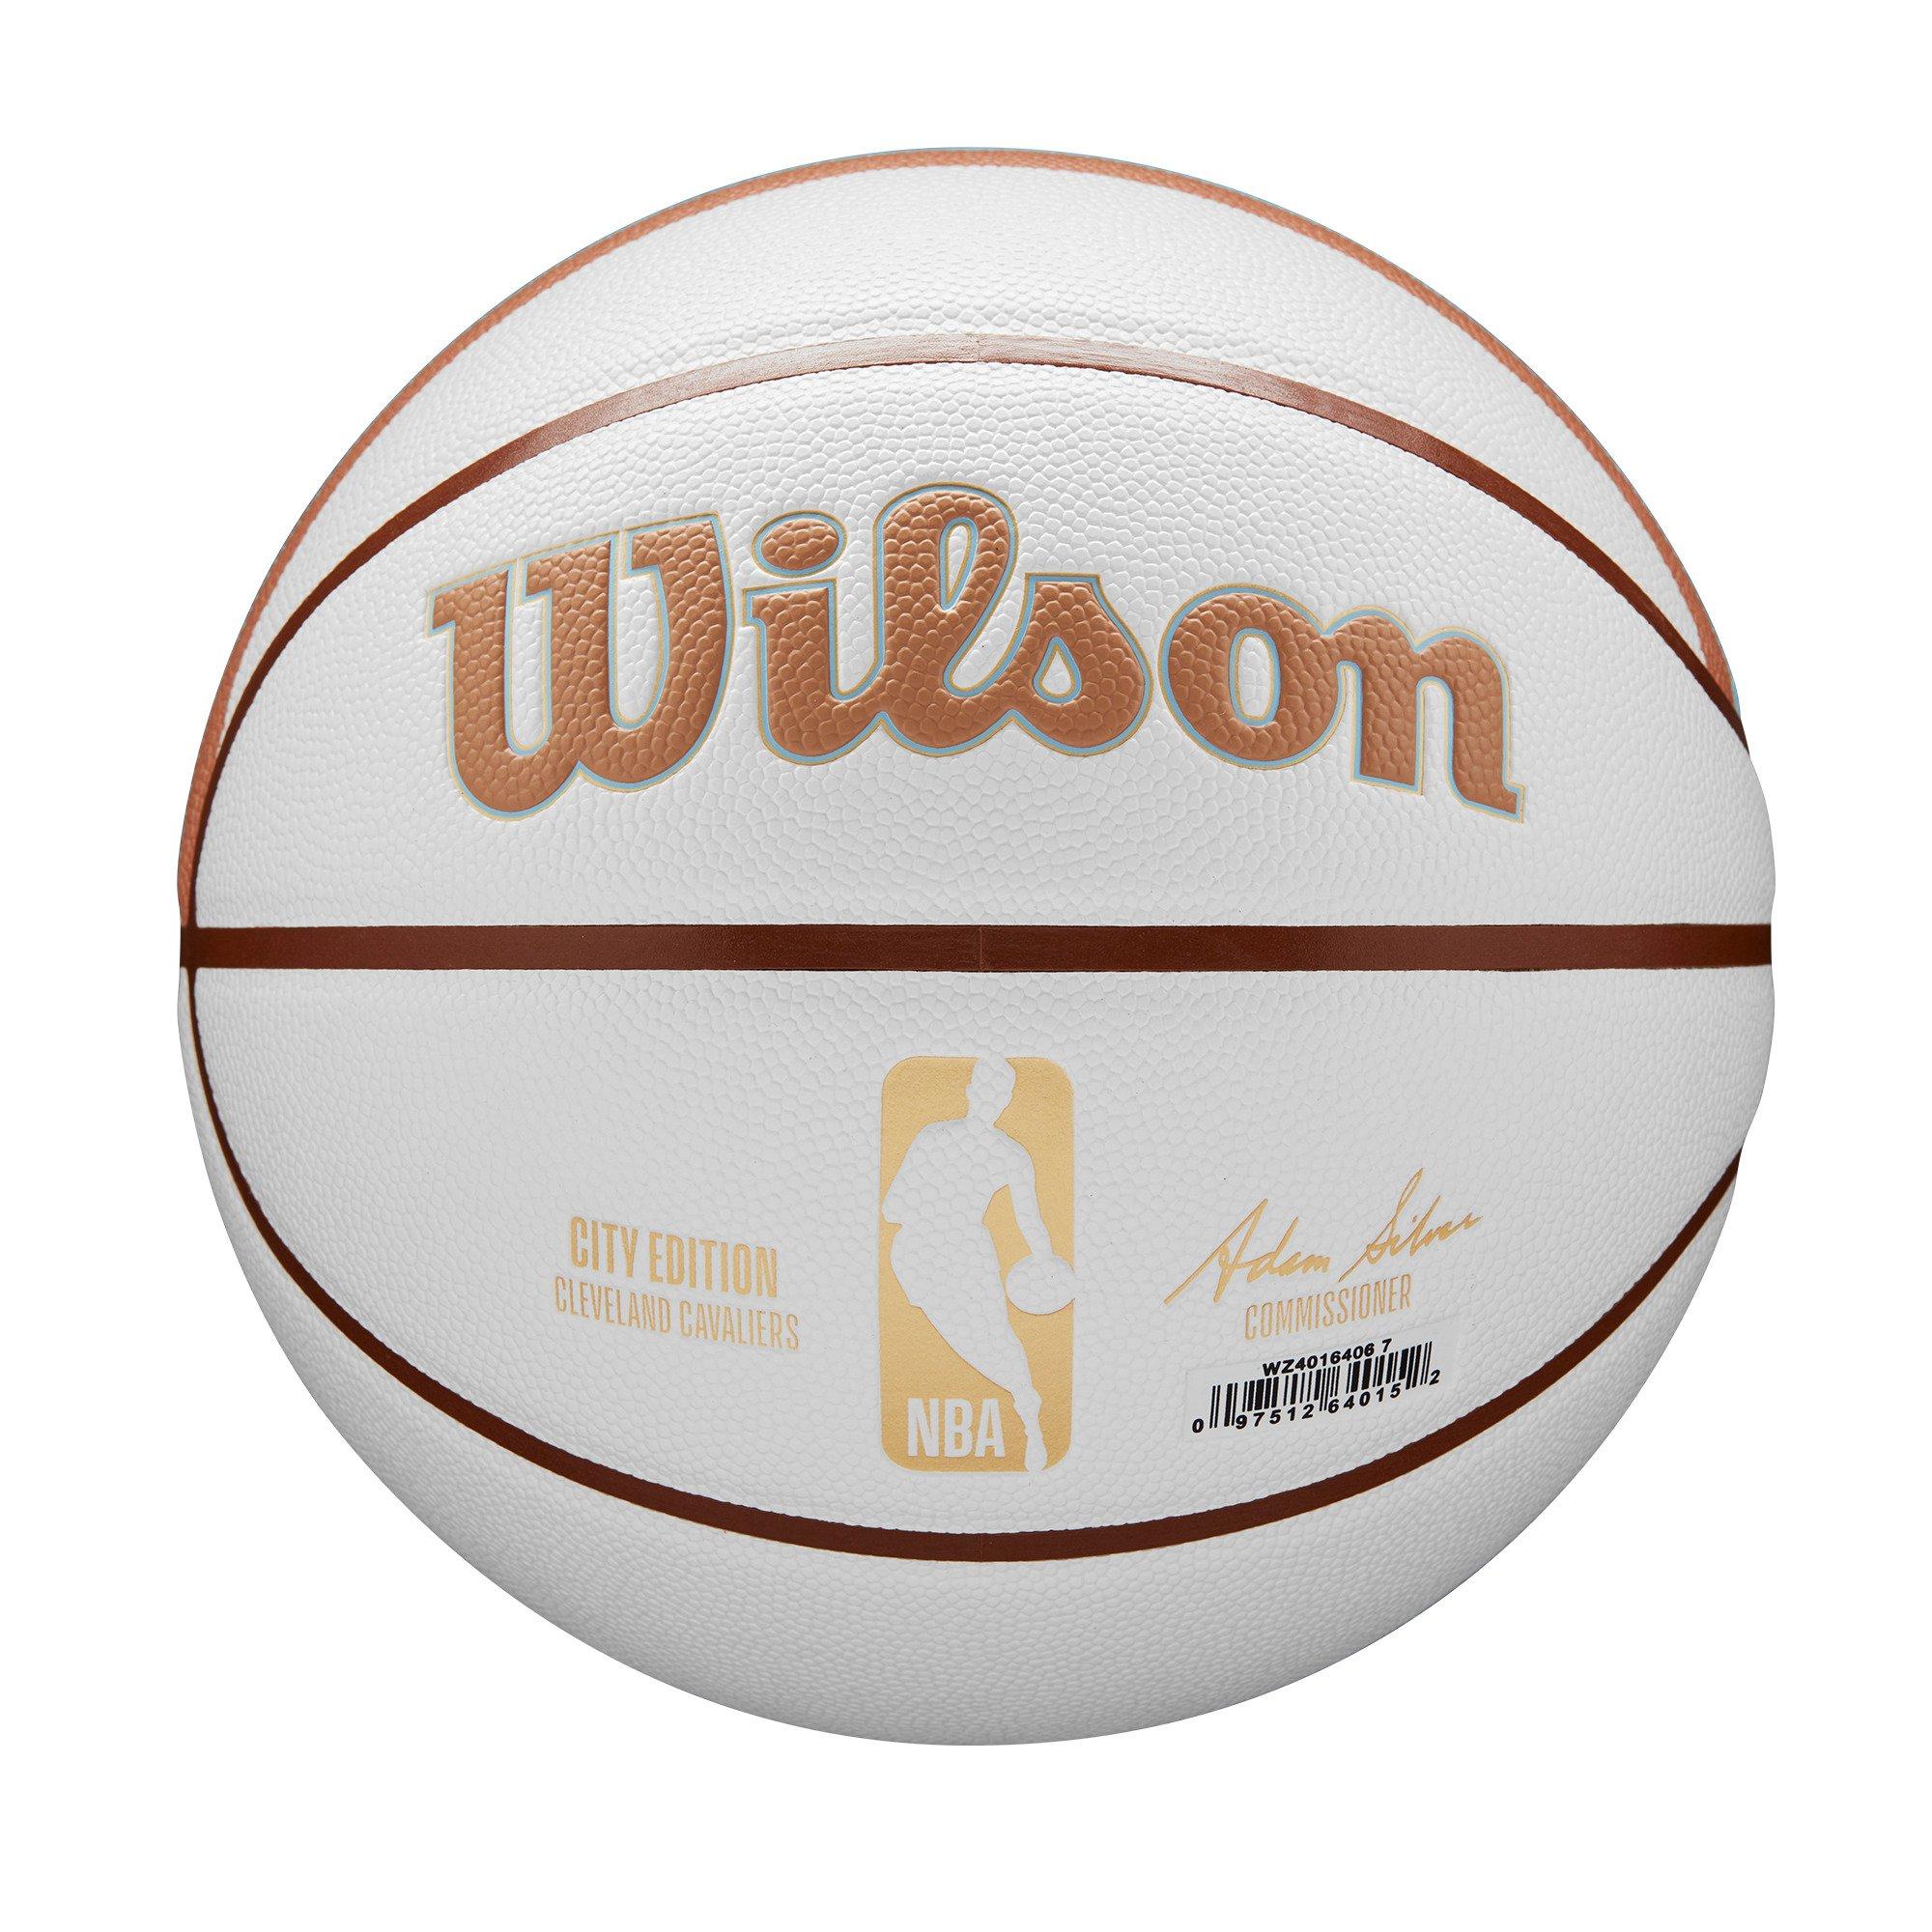 Wilson NBA City Edition Basketball Collection Release